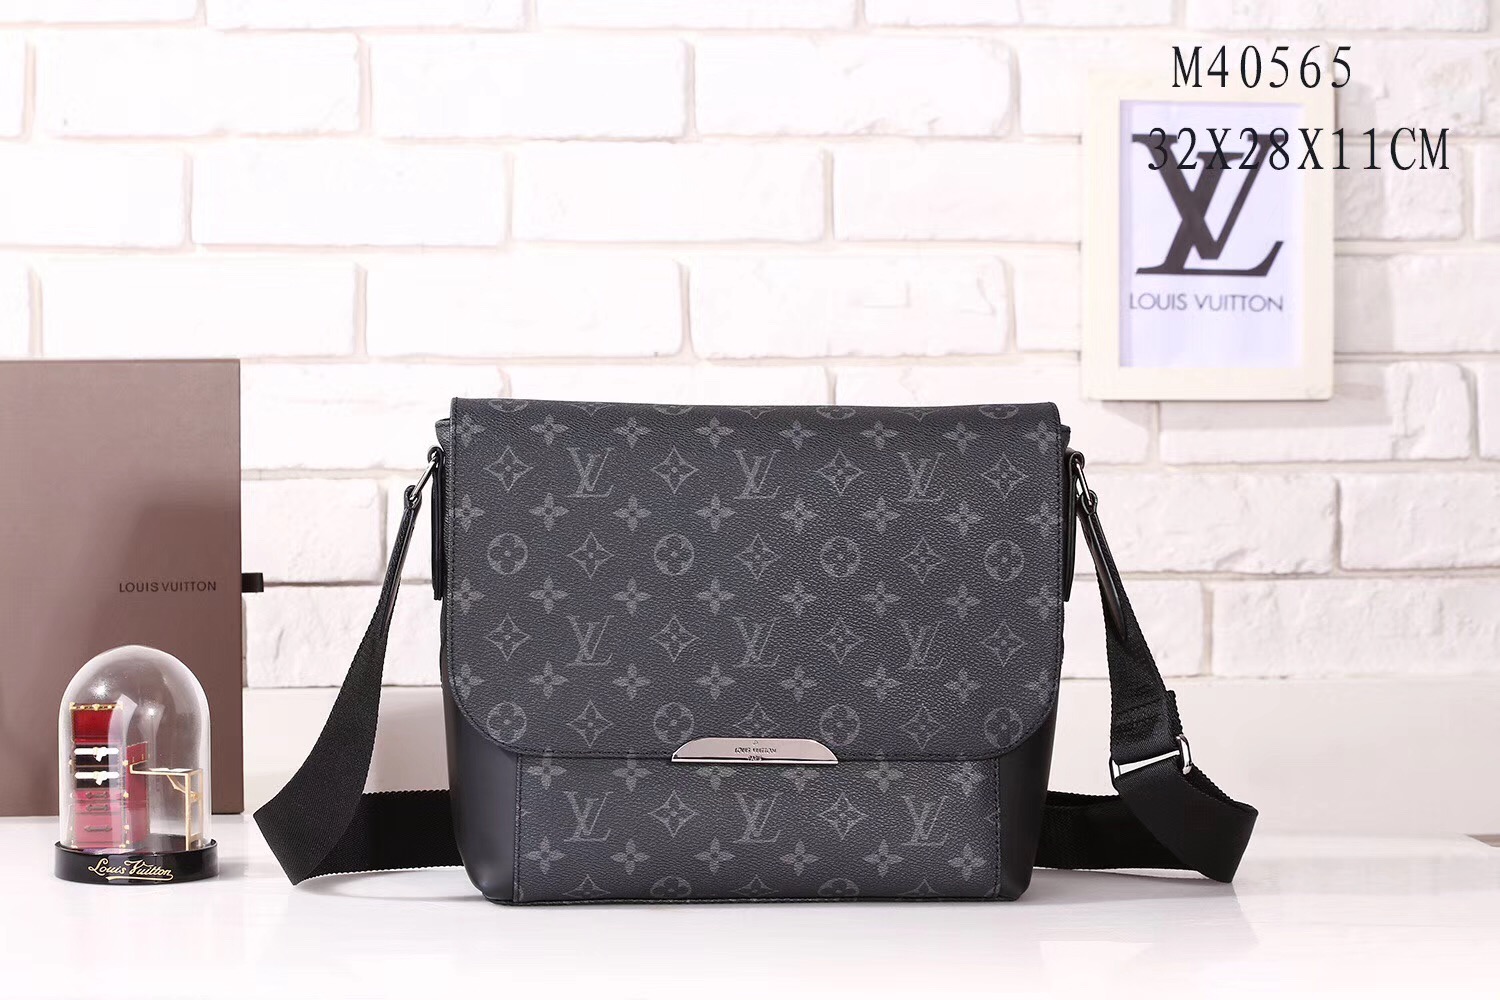 The Best Louis Vuitton Replica Handbags Site Online